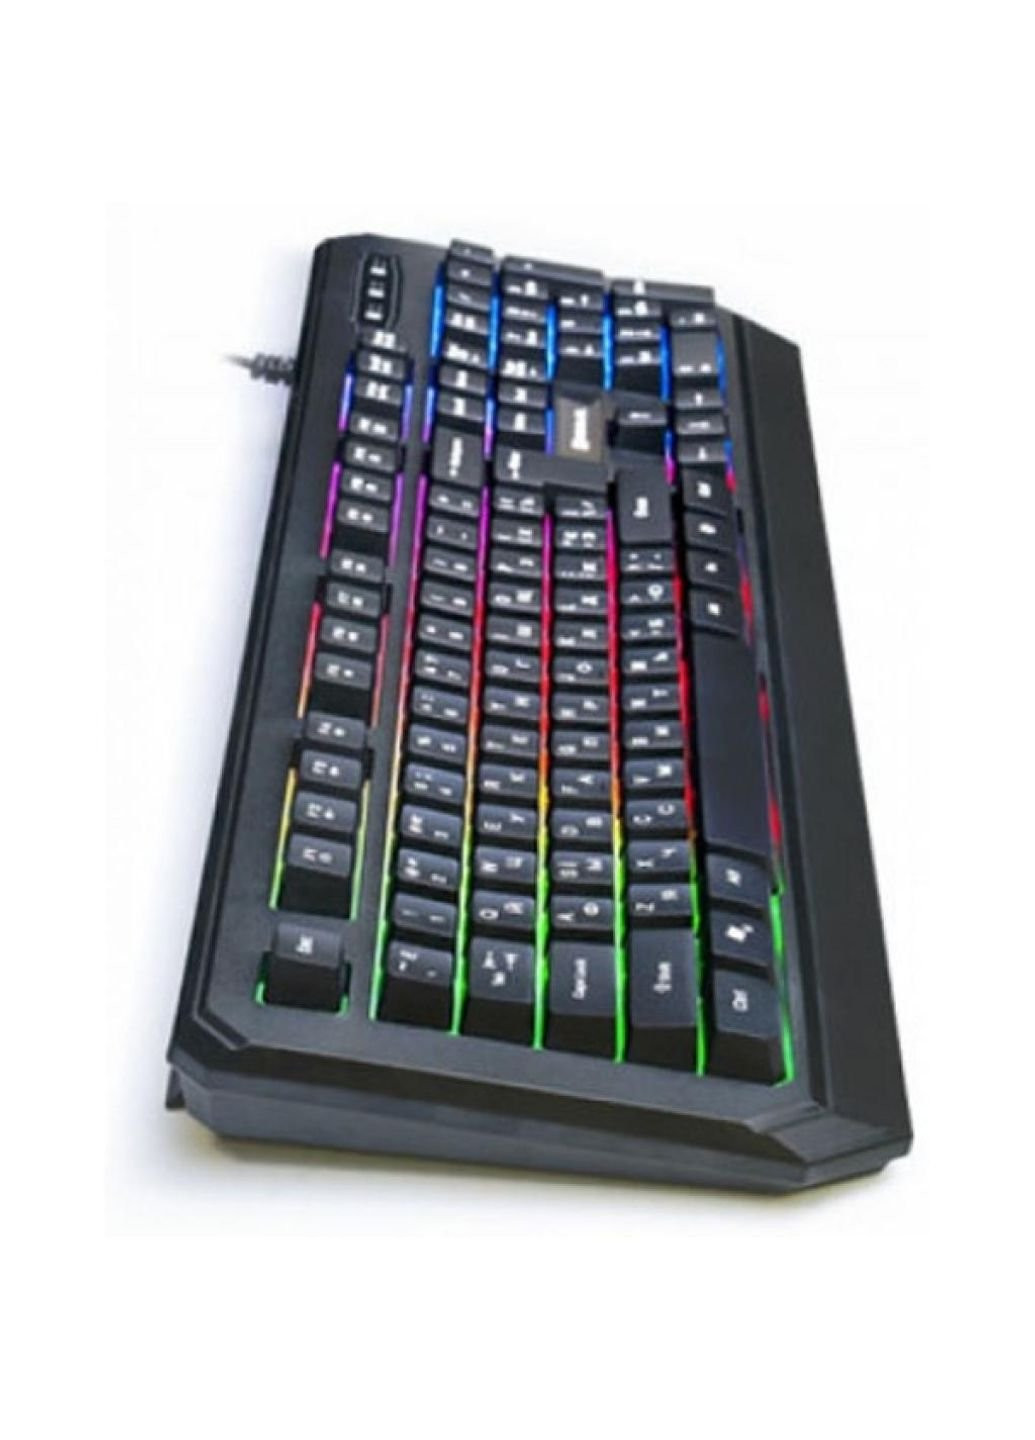 Клавиатура 7001 Comfort Backlit Black Real-El (250604685)